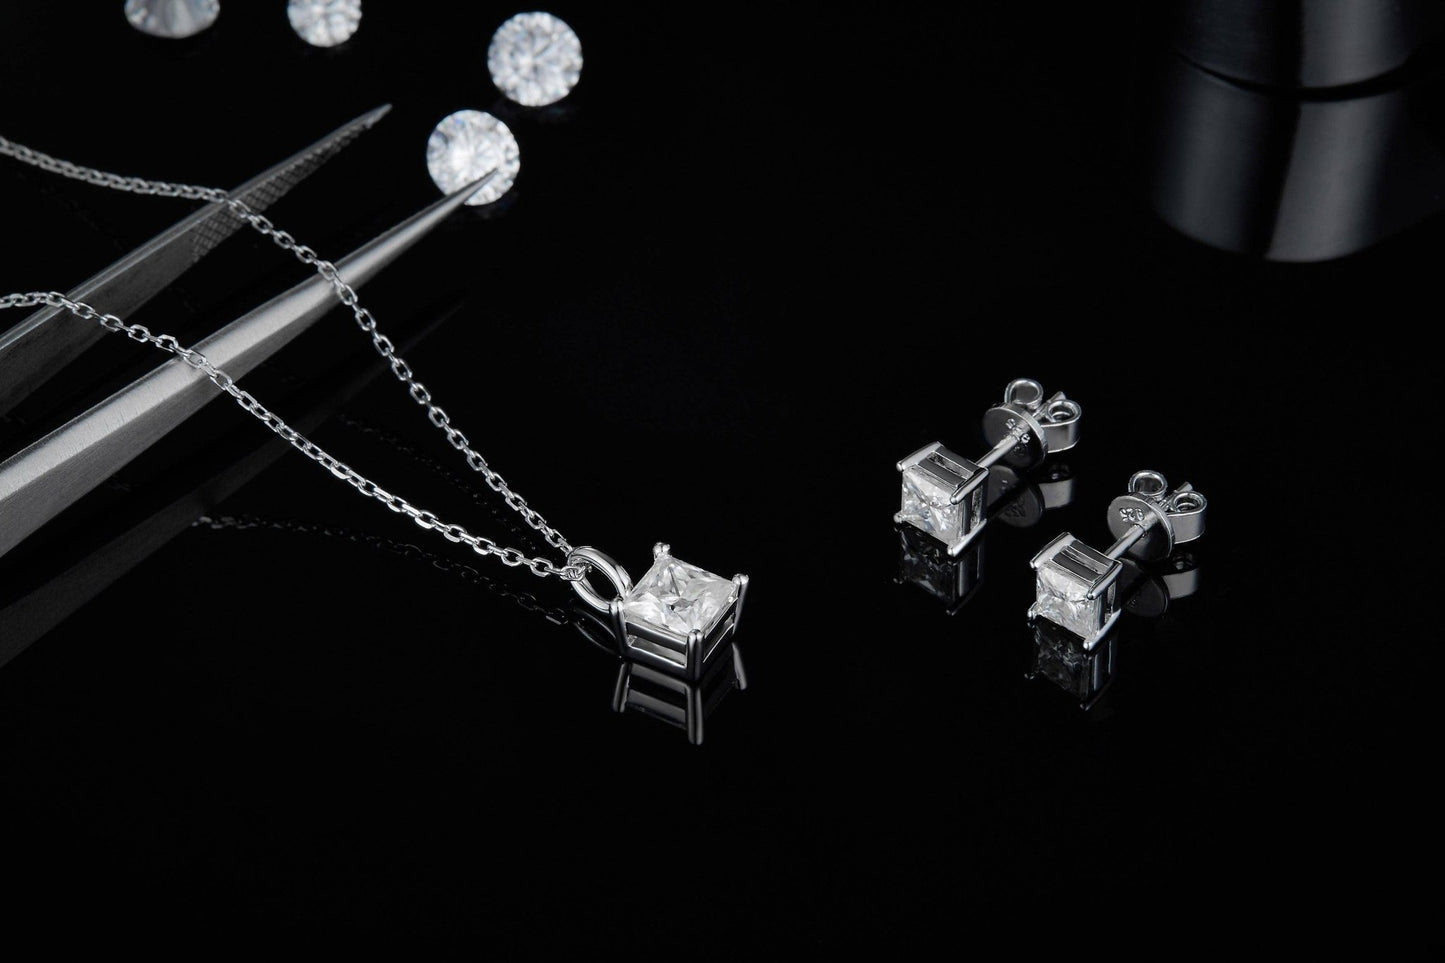 Square Cushion Cut Moissanite Necklace Earrings Set - Black Diamonds New York